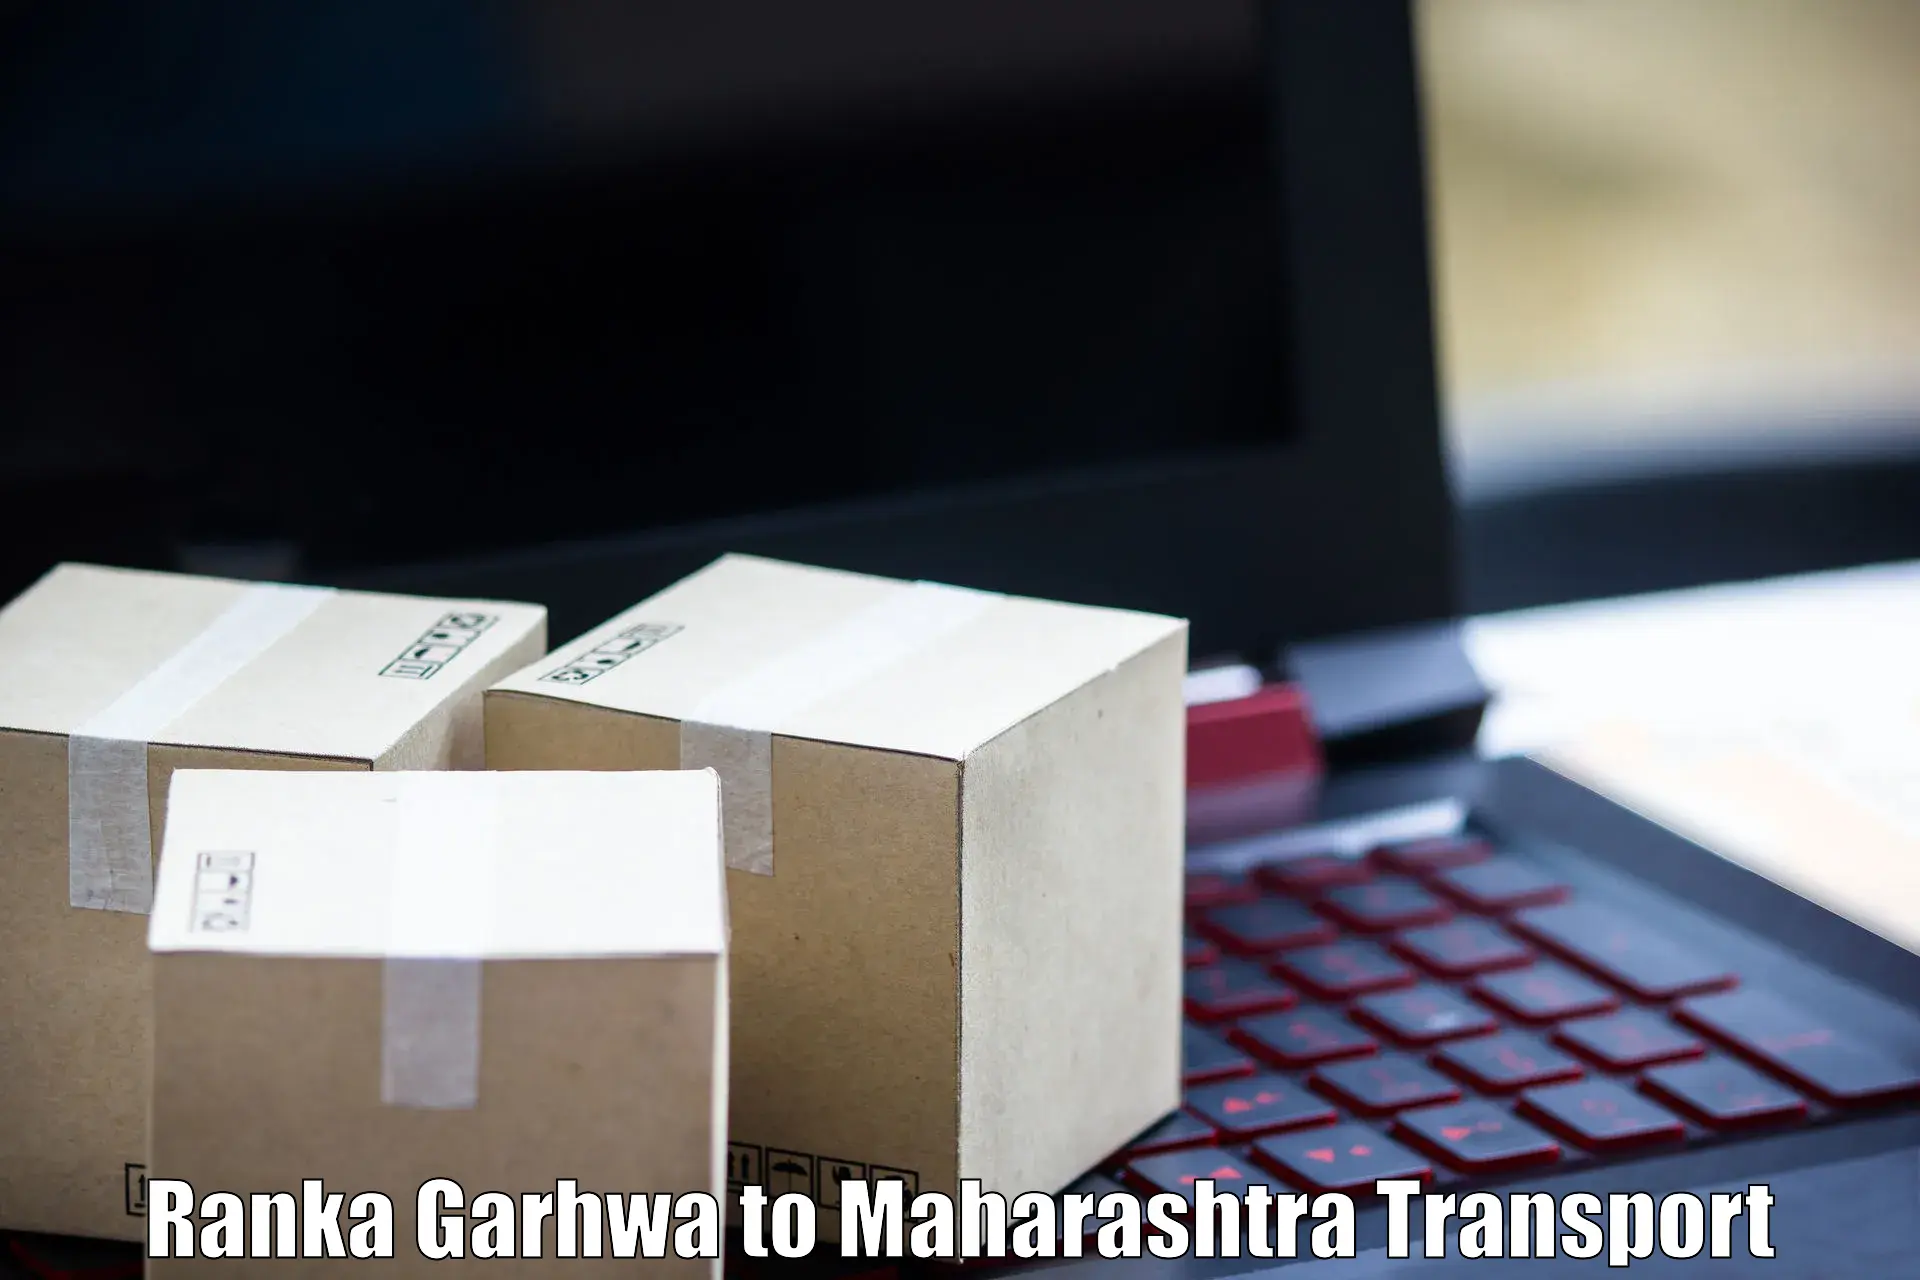 Transport in sharing Ranka Garhwa to Pune